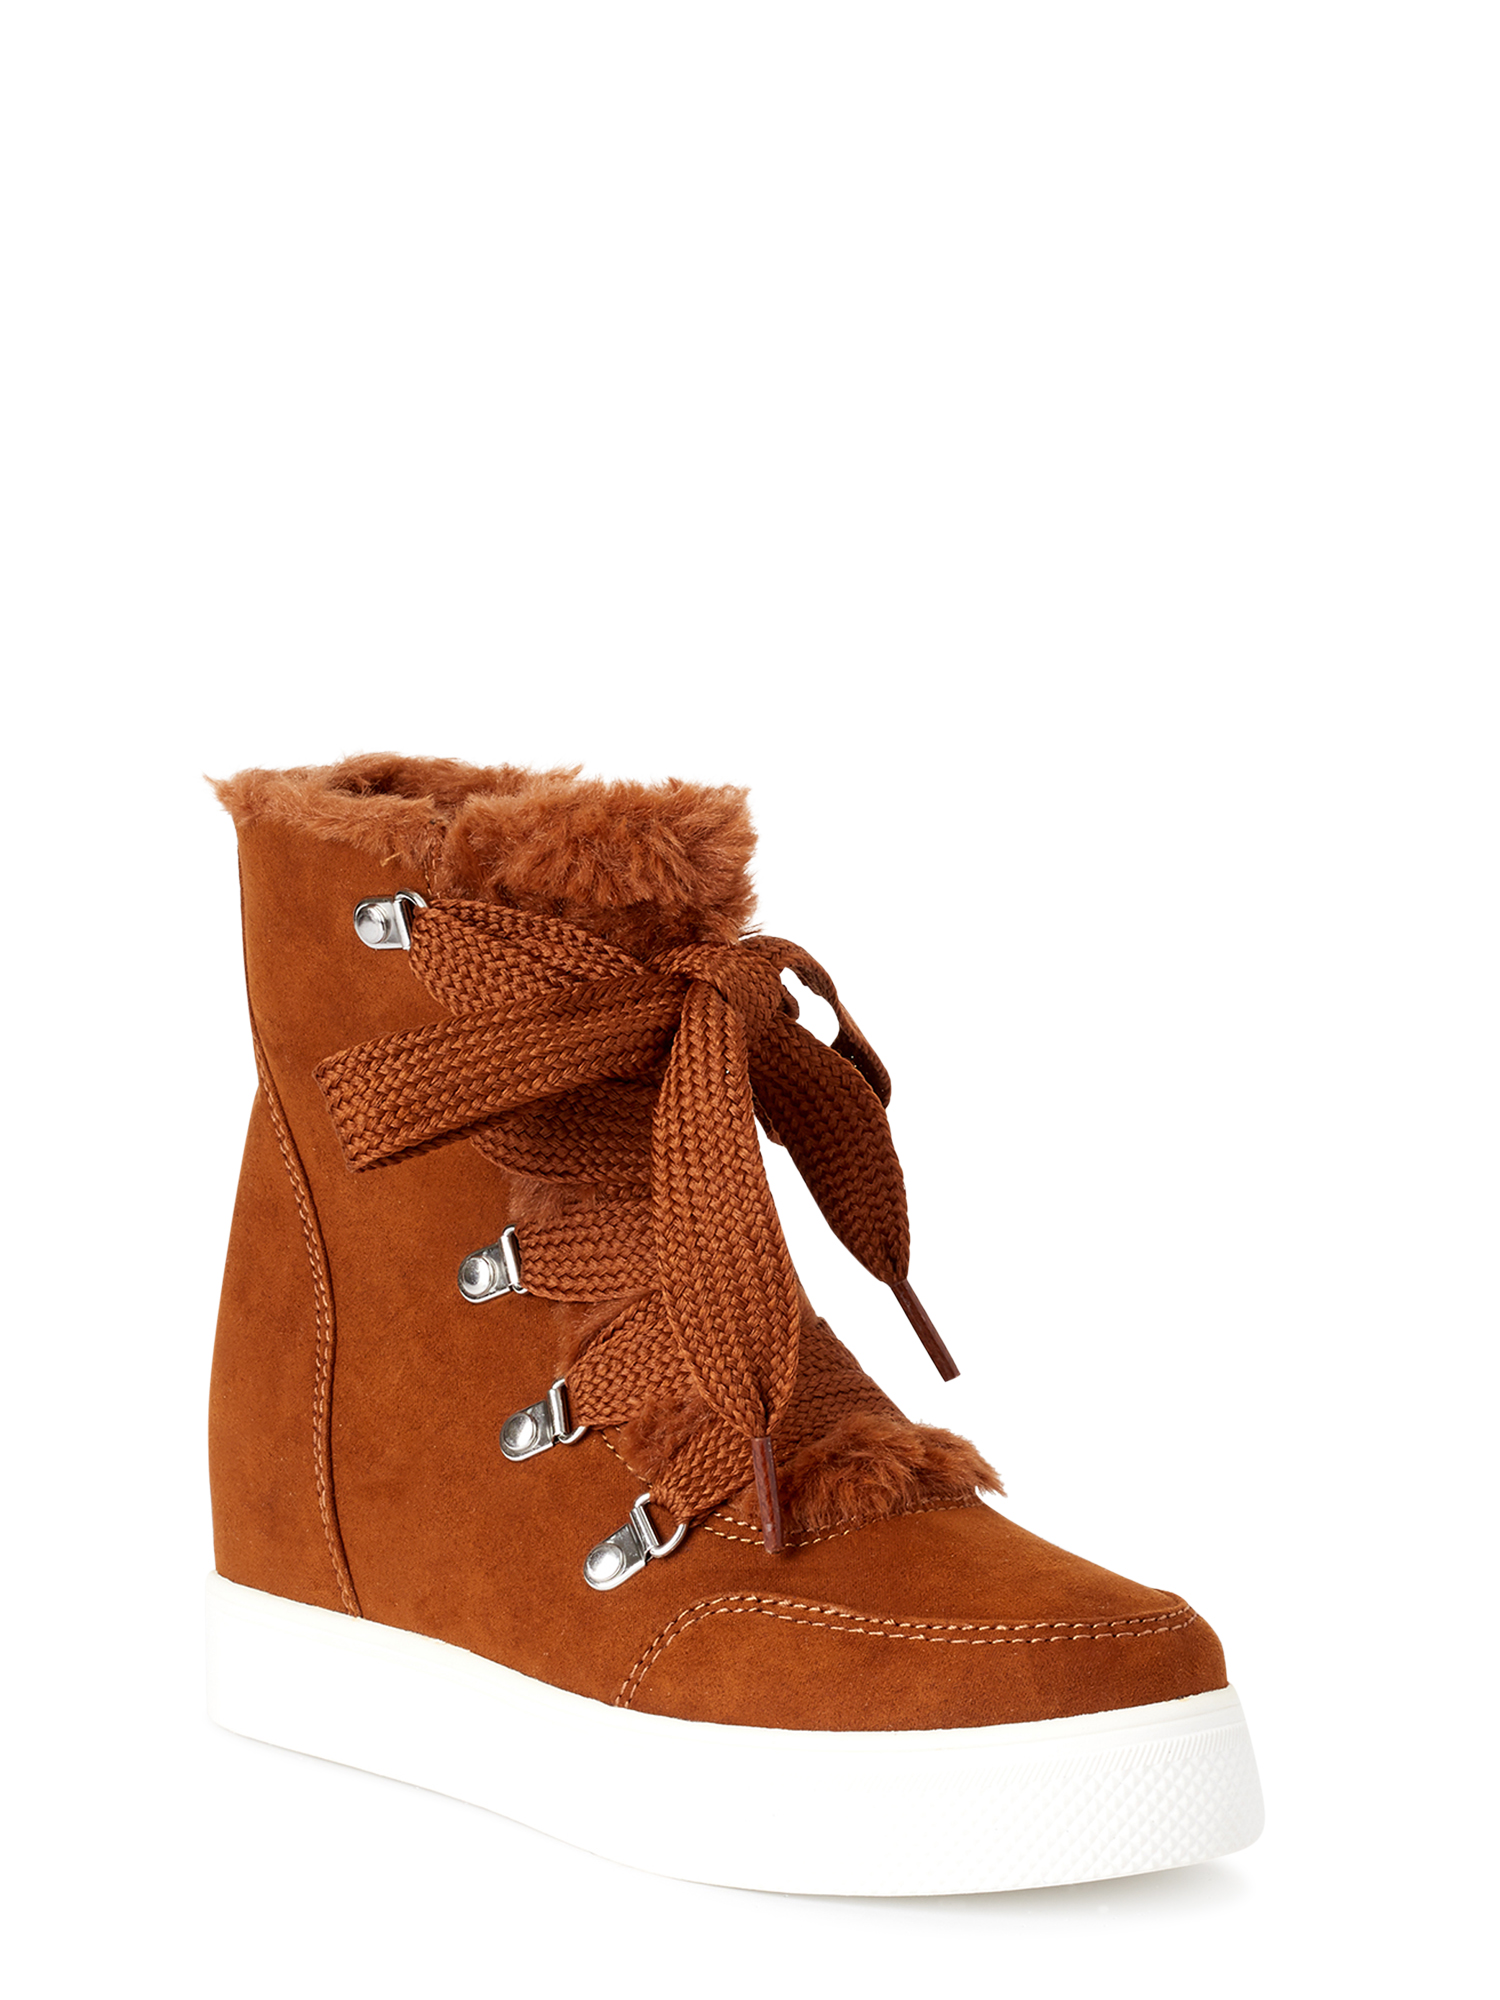 Isaac Mizrahi Womens Boots Burgundy Suede Faux Sherpa Karen Wedge Size 6